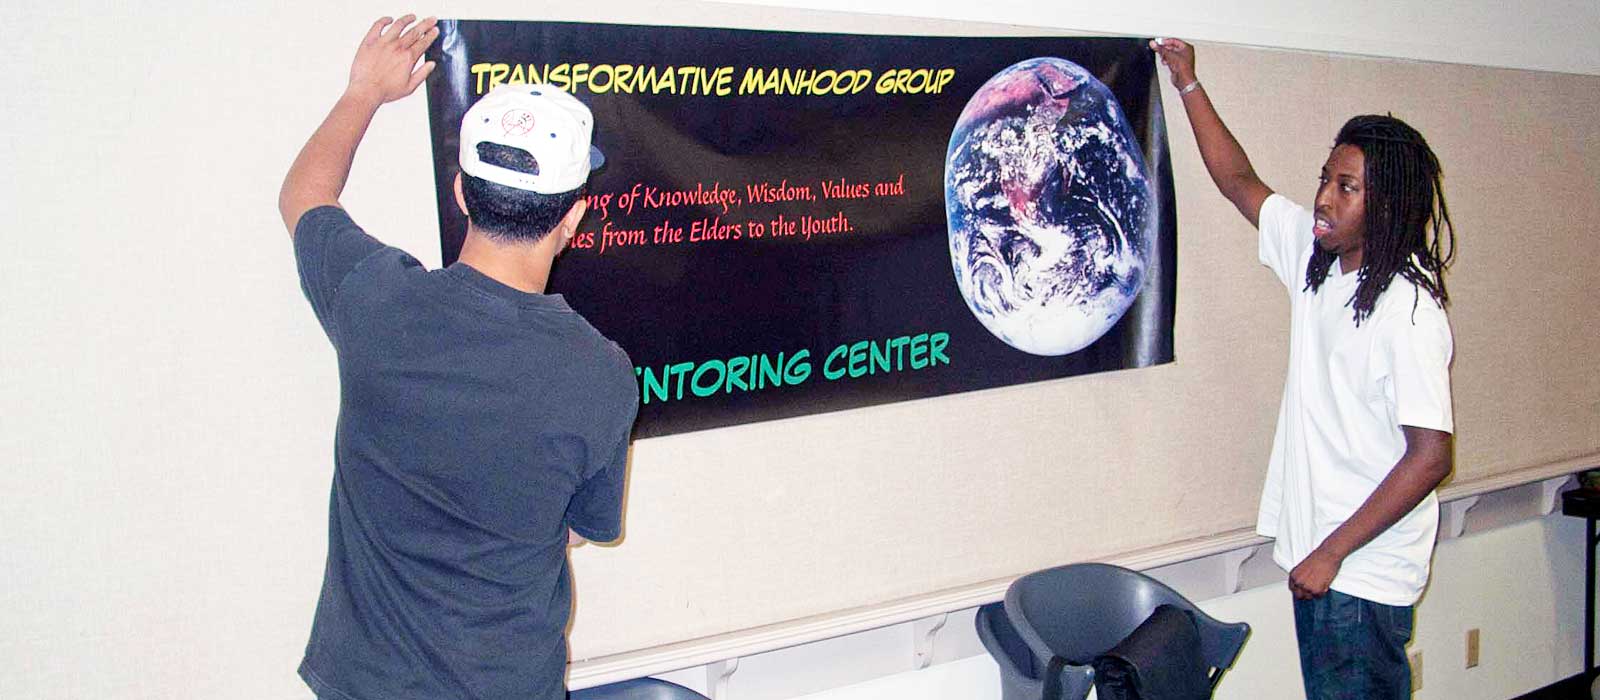 Transformative Manhood Group members hanging sign